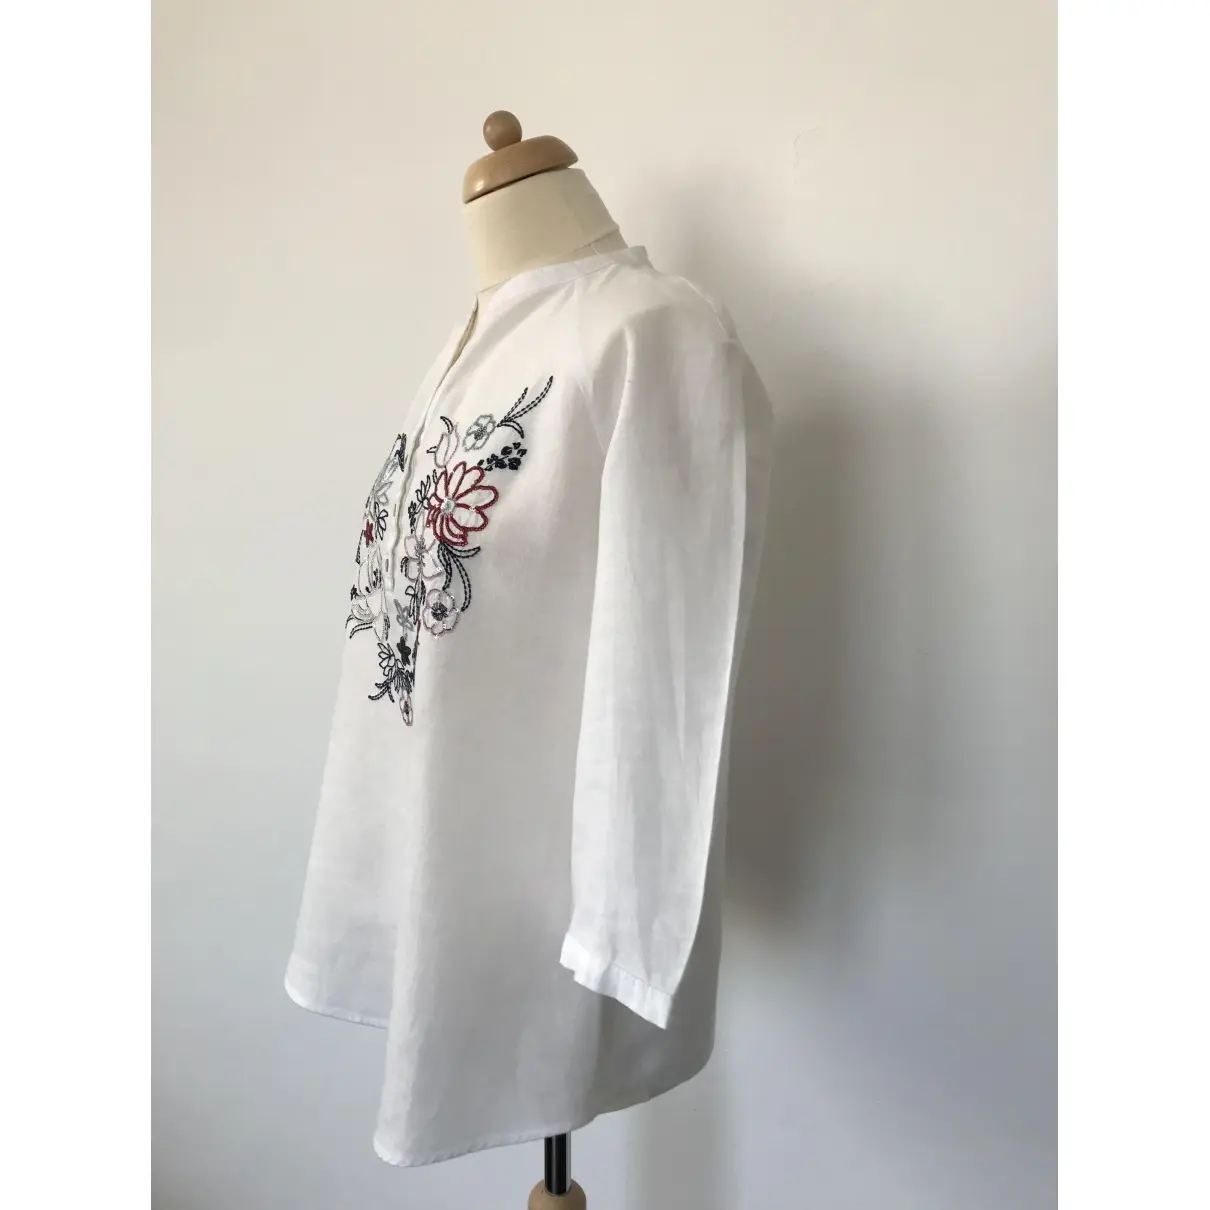 Buy Weber Linen tunic online